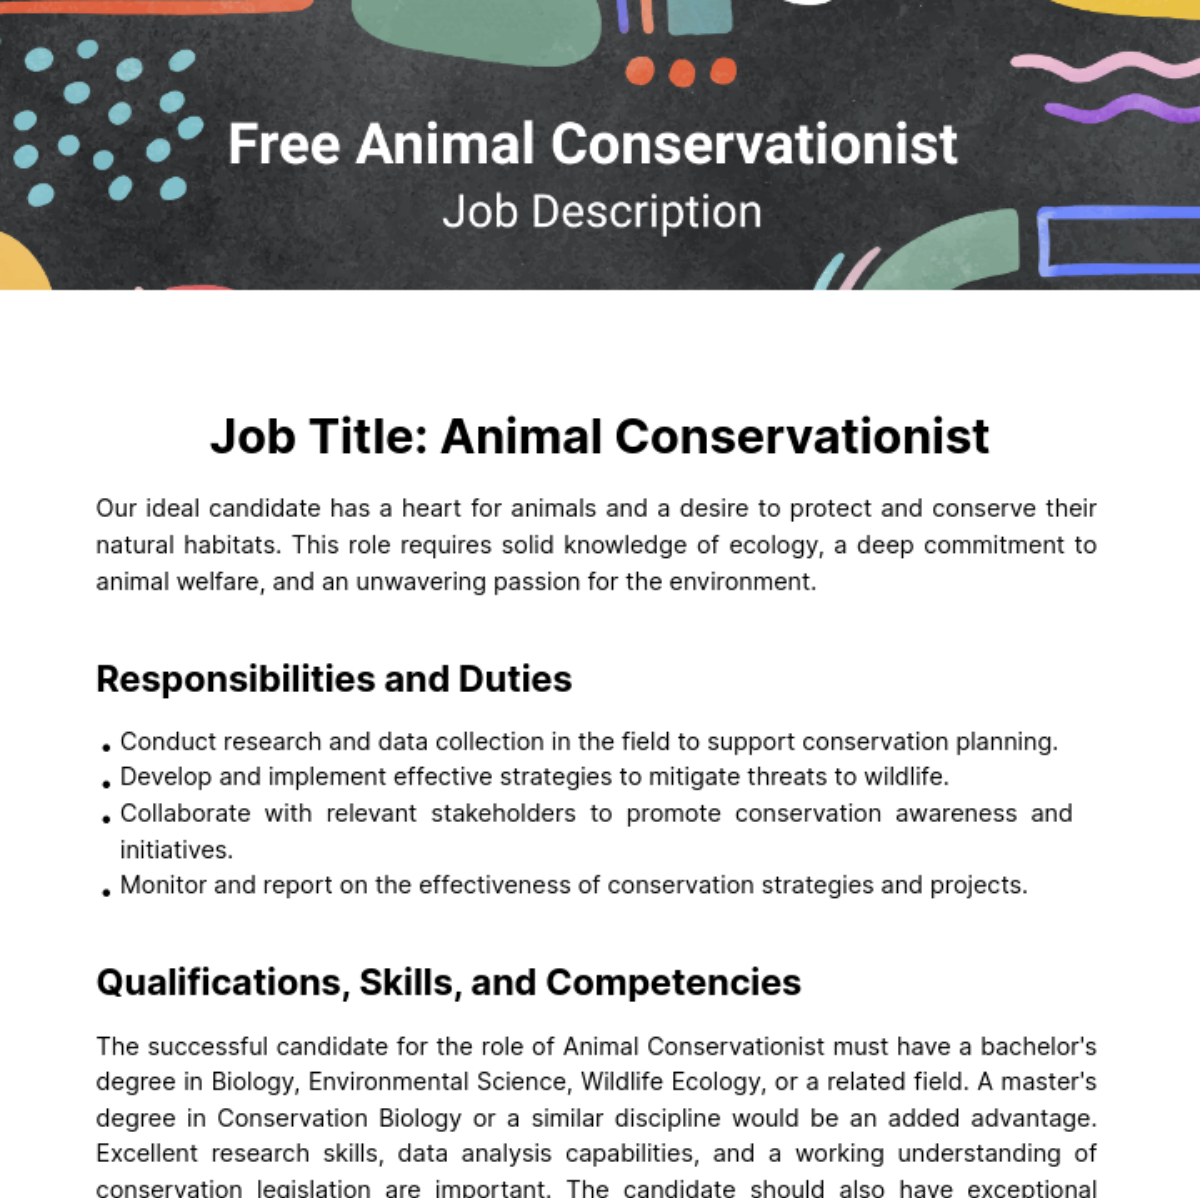 Free Animal Conservationist Job Description Template